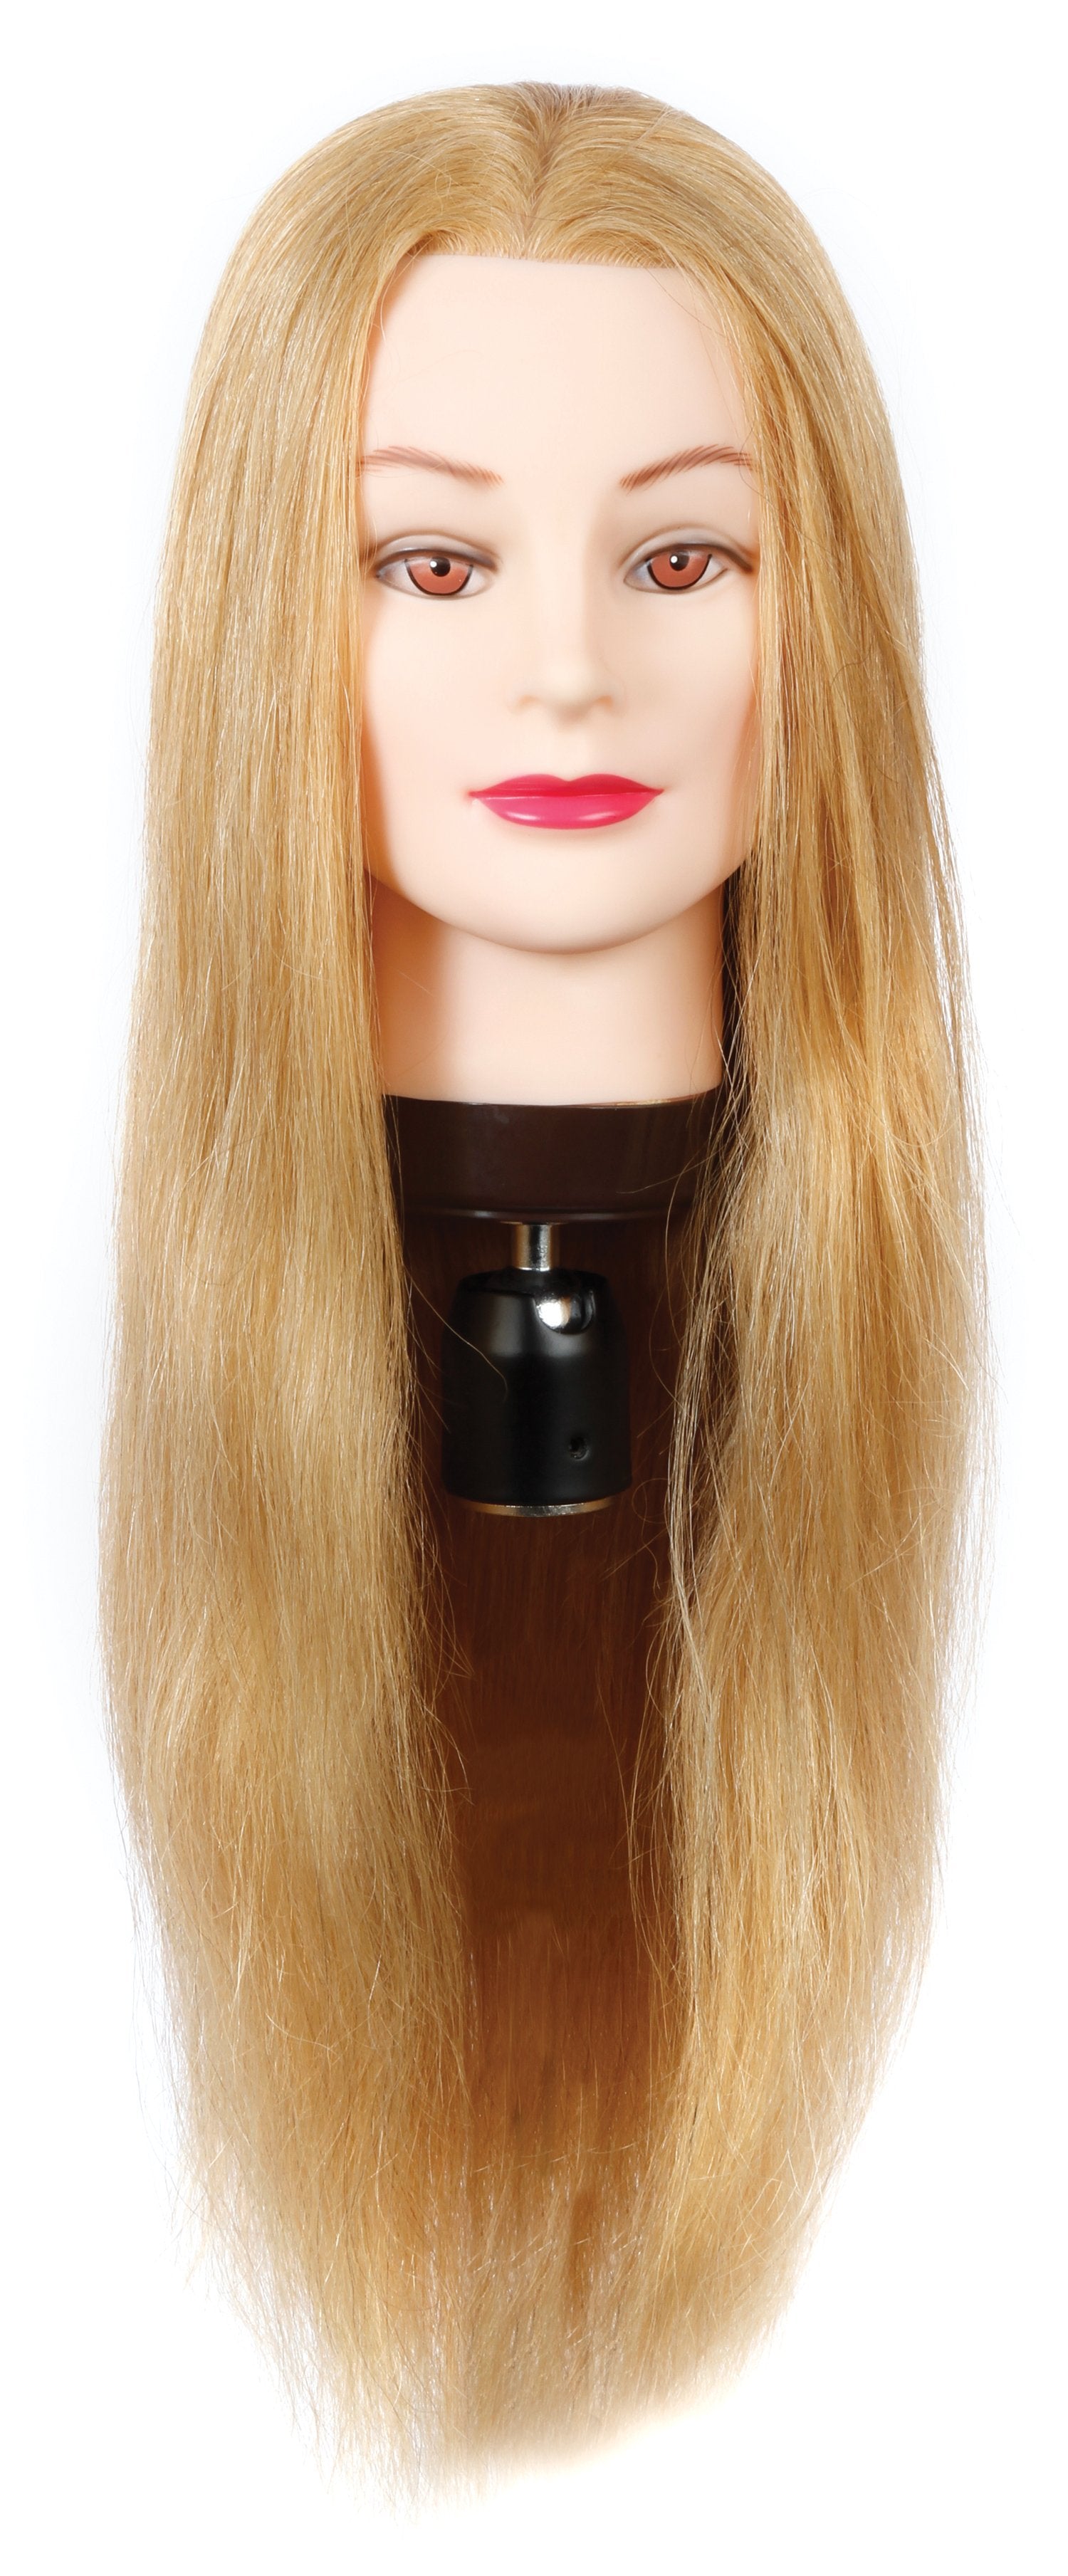 Nicole [80% Human Hair Mannequin]